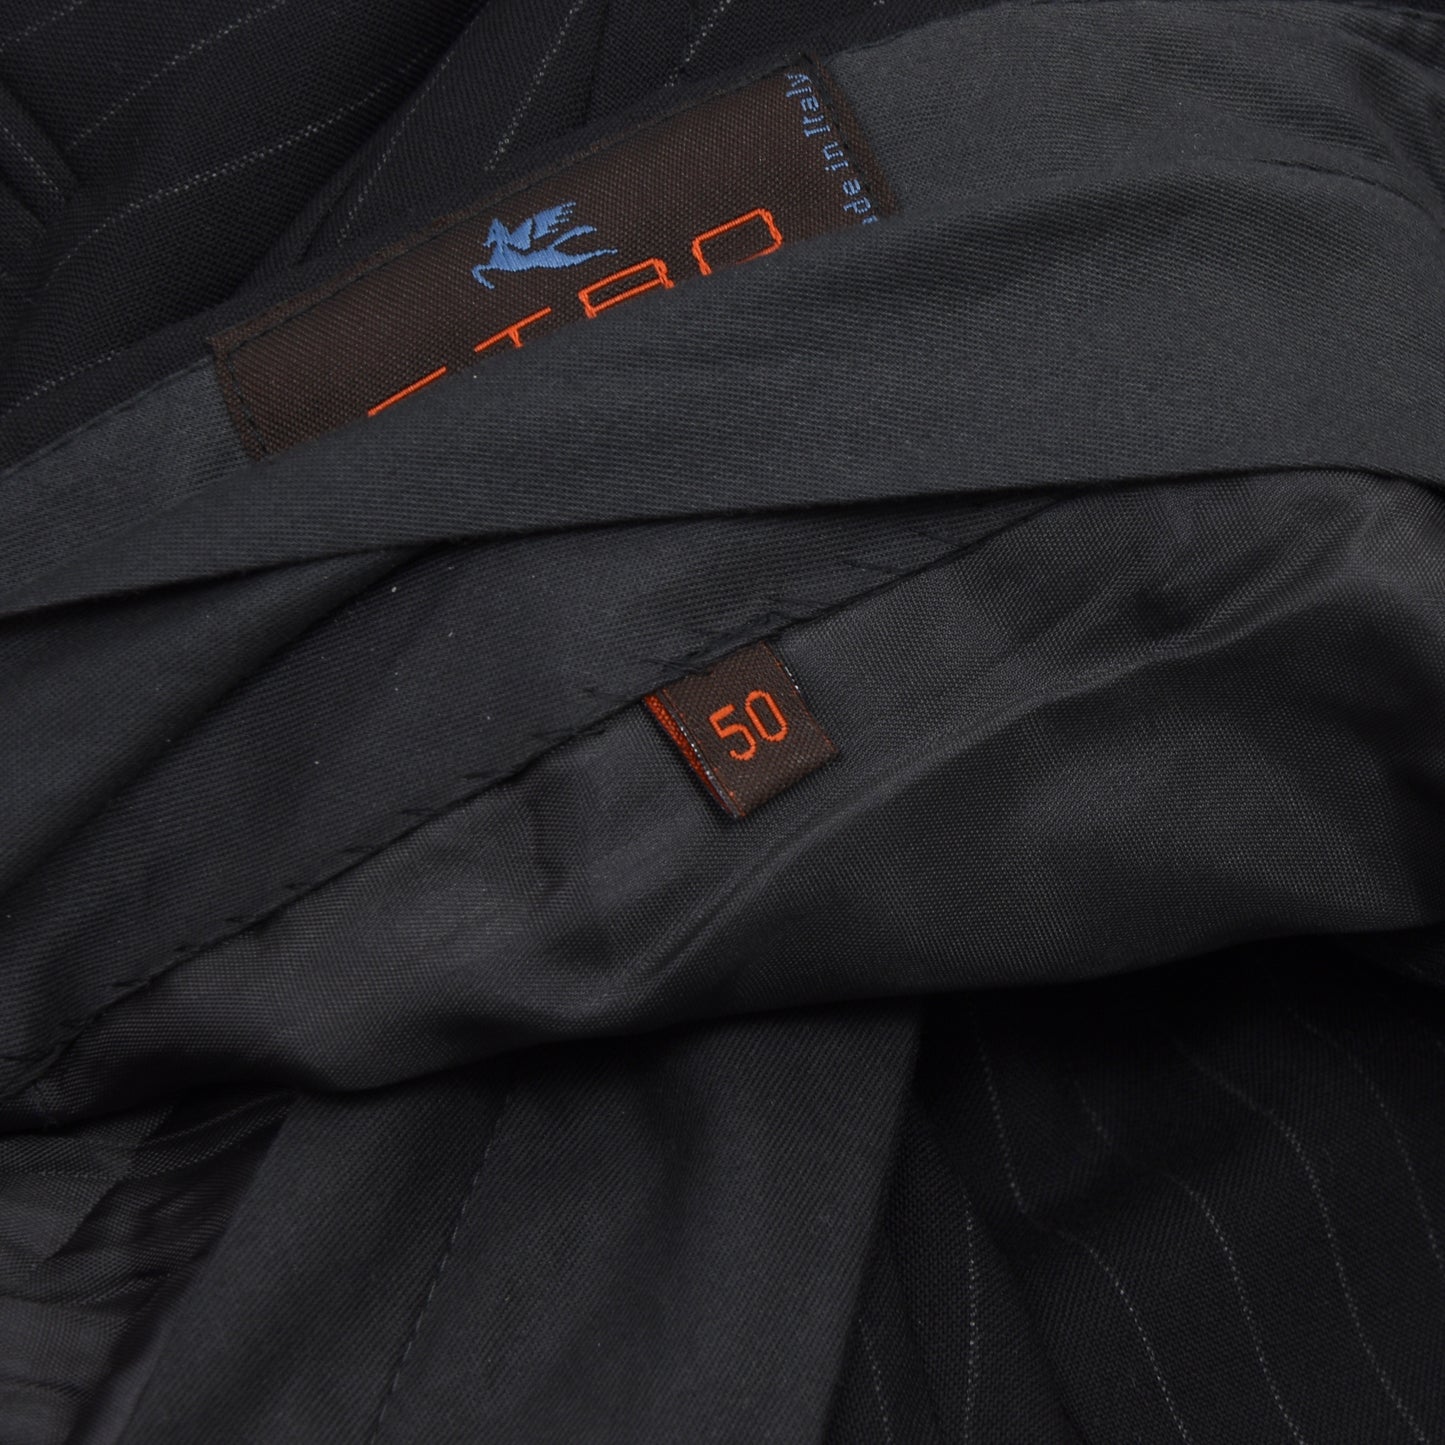 Etro Milano Wool Suit Size 50 - Stripes